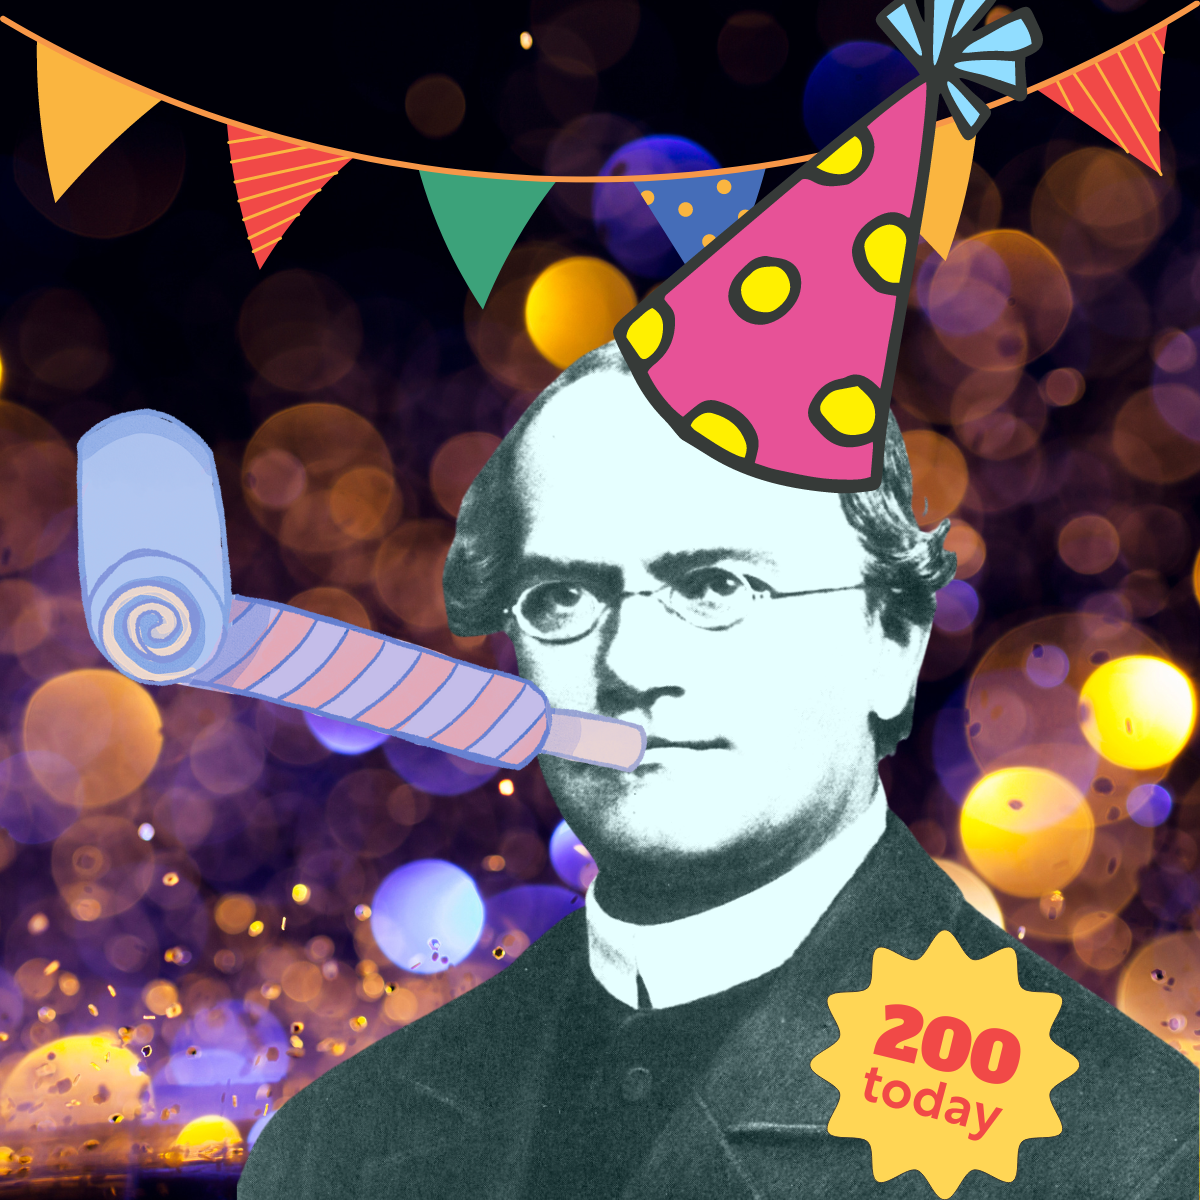 S5.16 Hap-pea 200th birthday, Mendel!